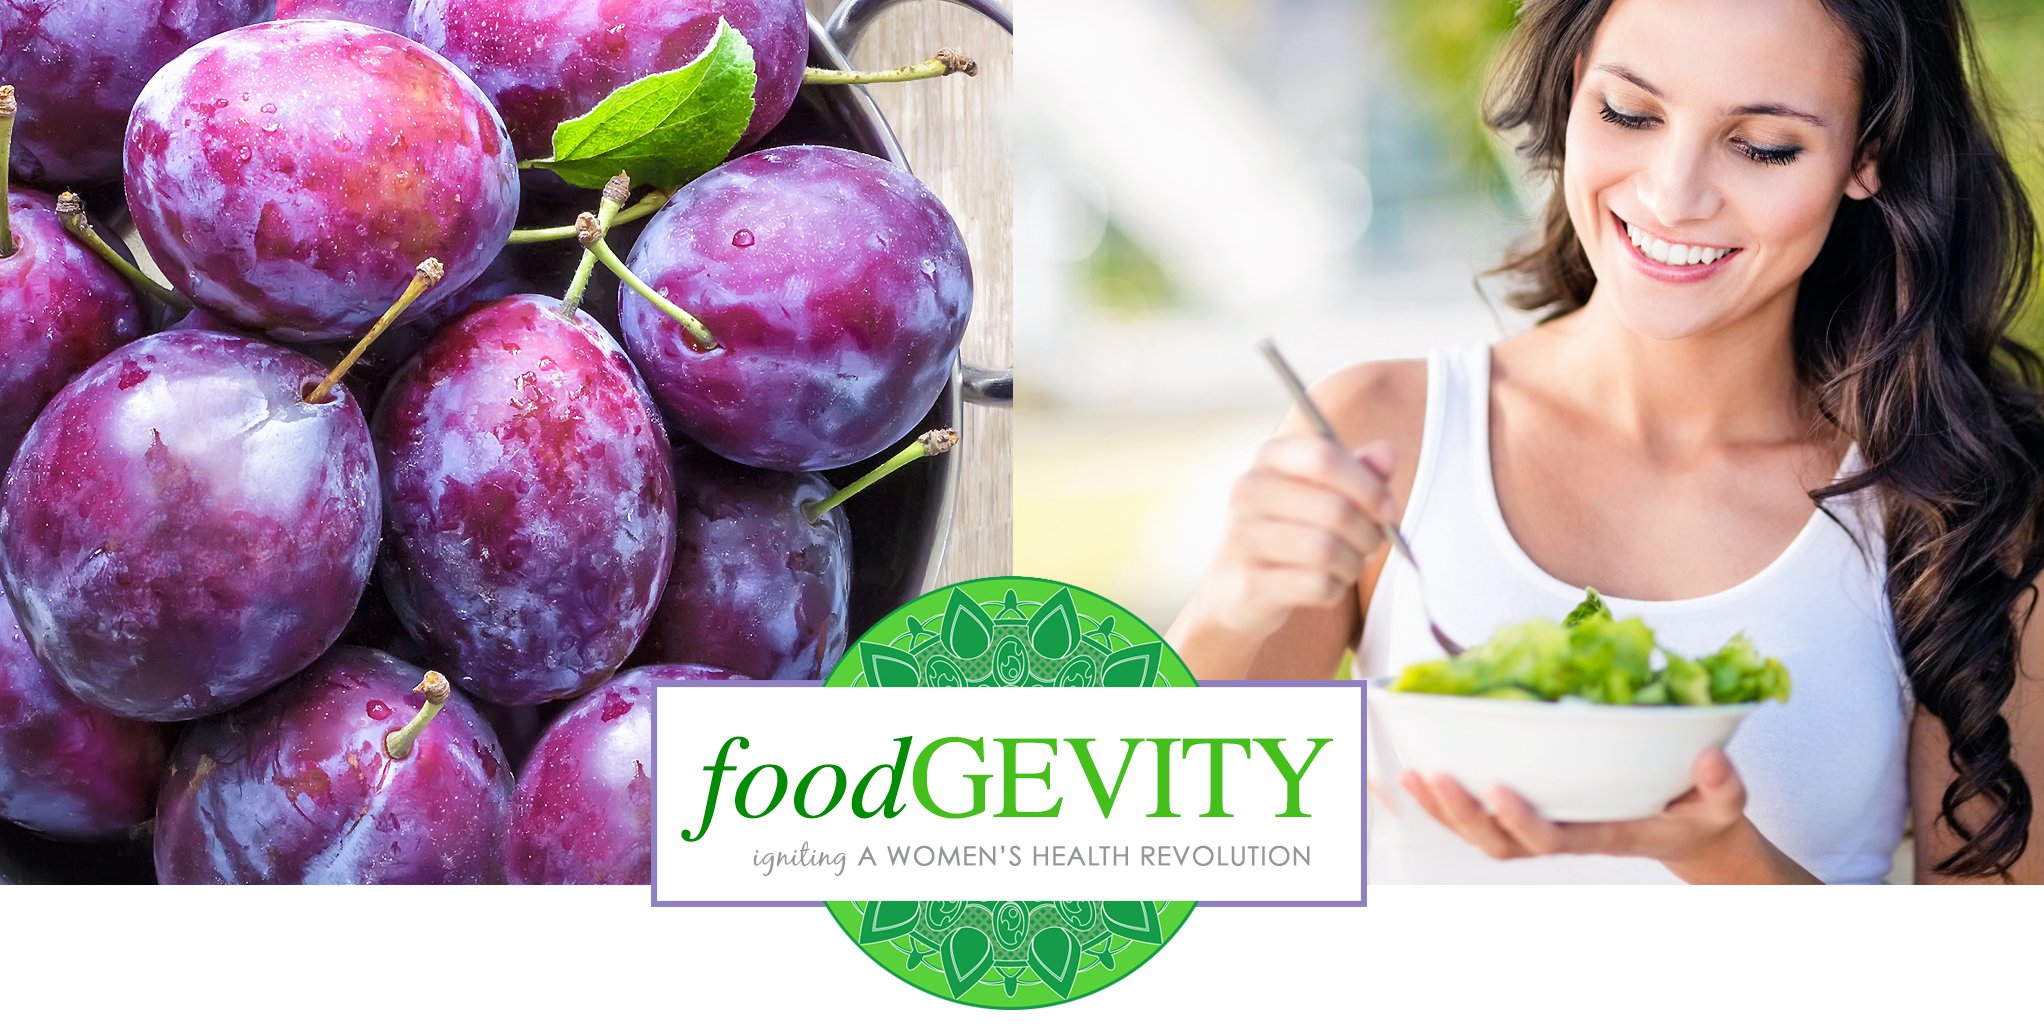 foodgevity+banner+for+portfolio+new+logo.jpg